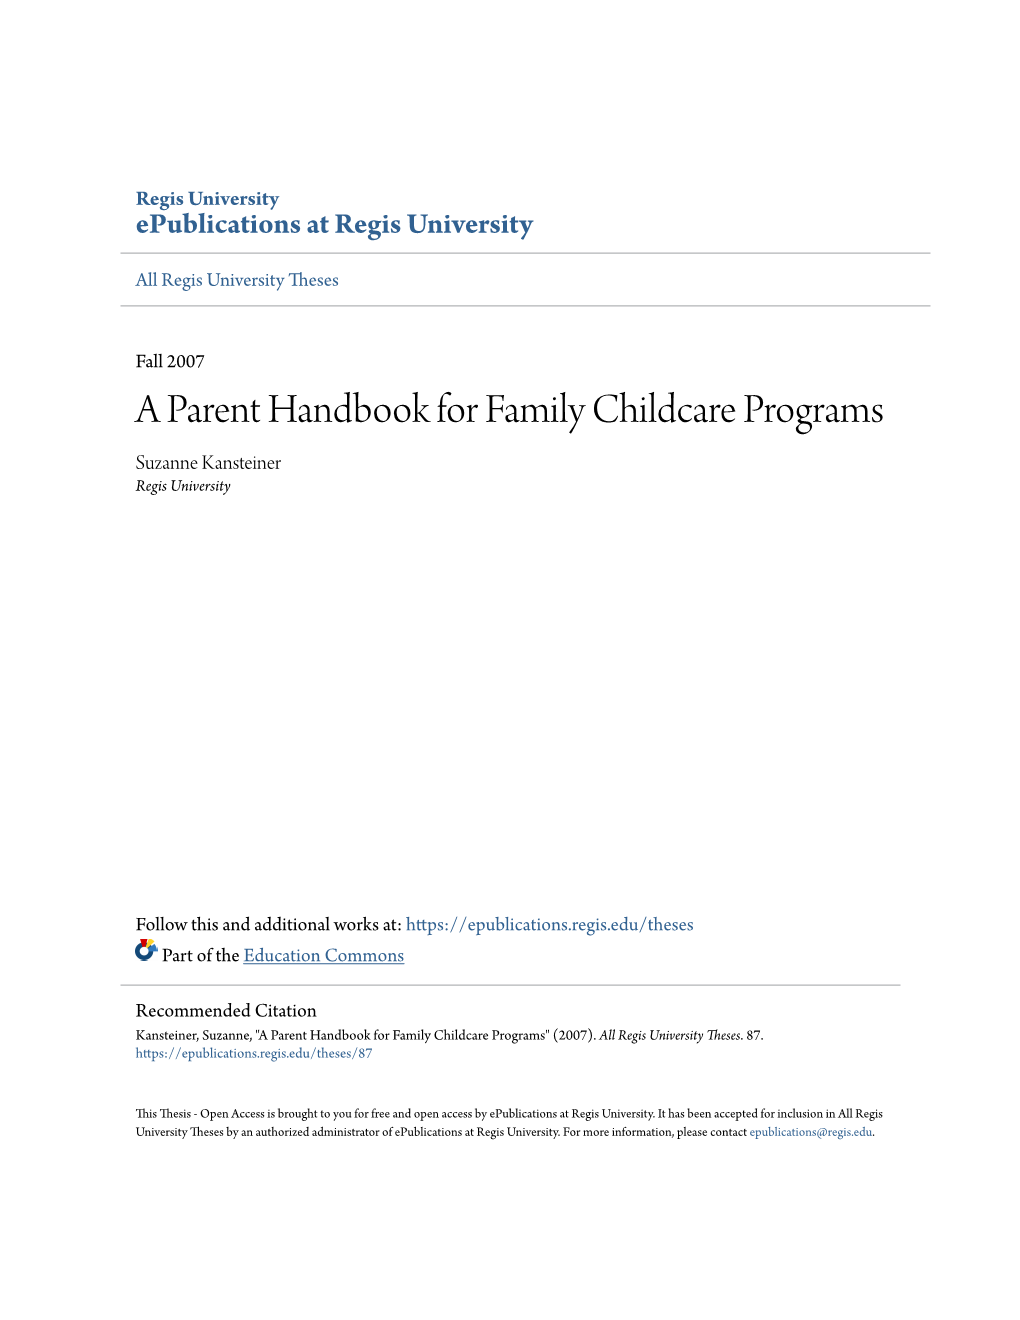 A Parent Handbook for Family Childcare Programs Suzanne Kansteiner Regis University